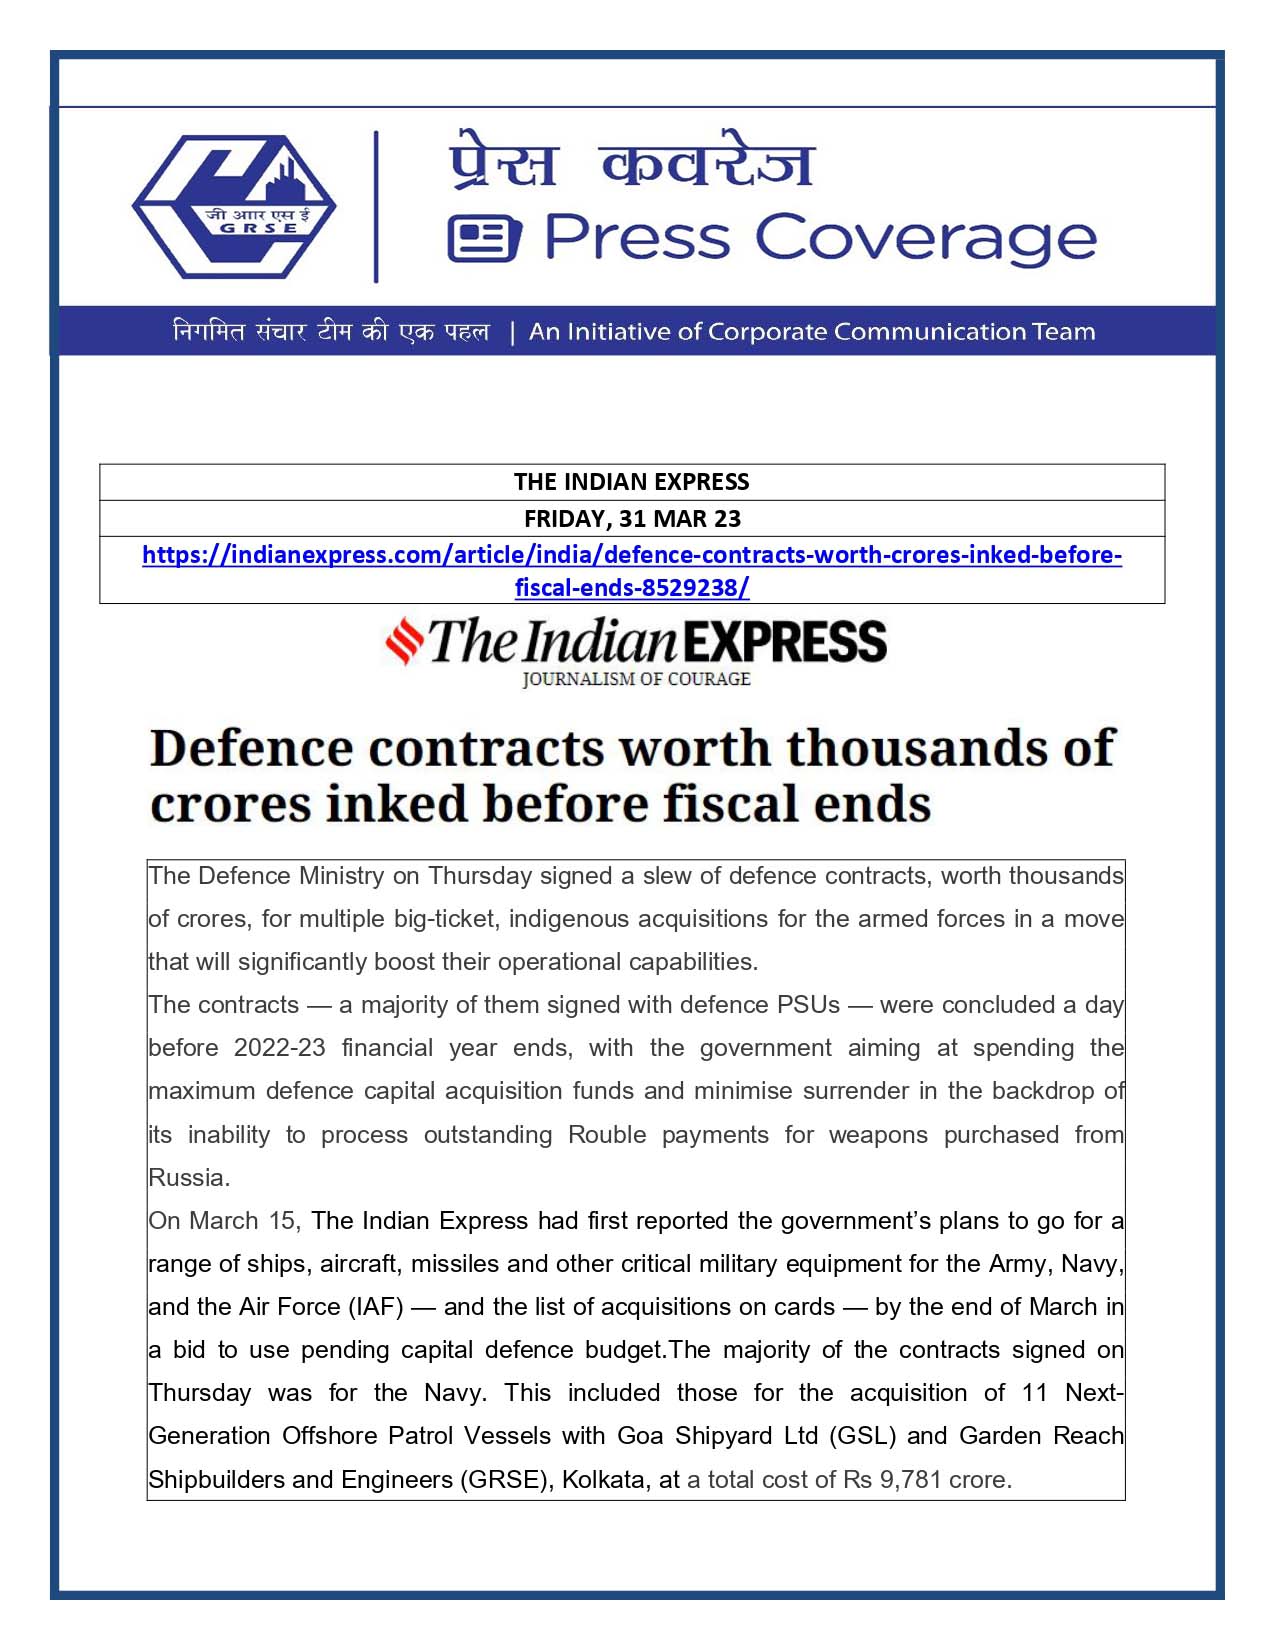 The Indian Express 31 Mar 23